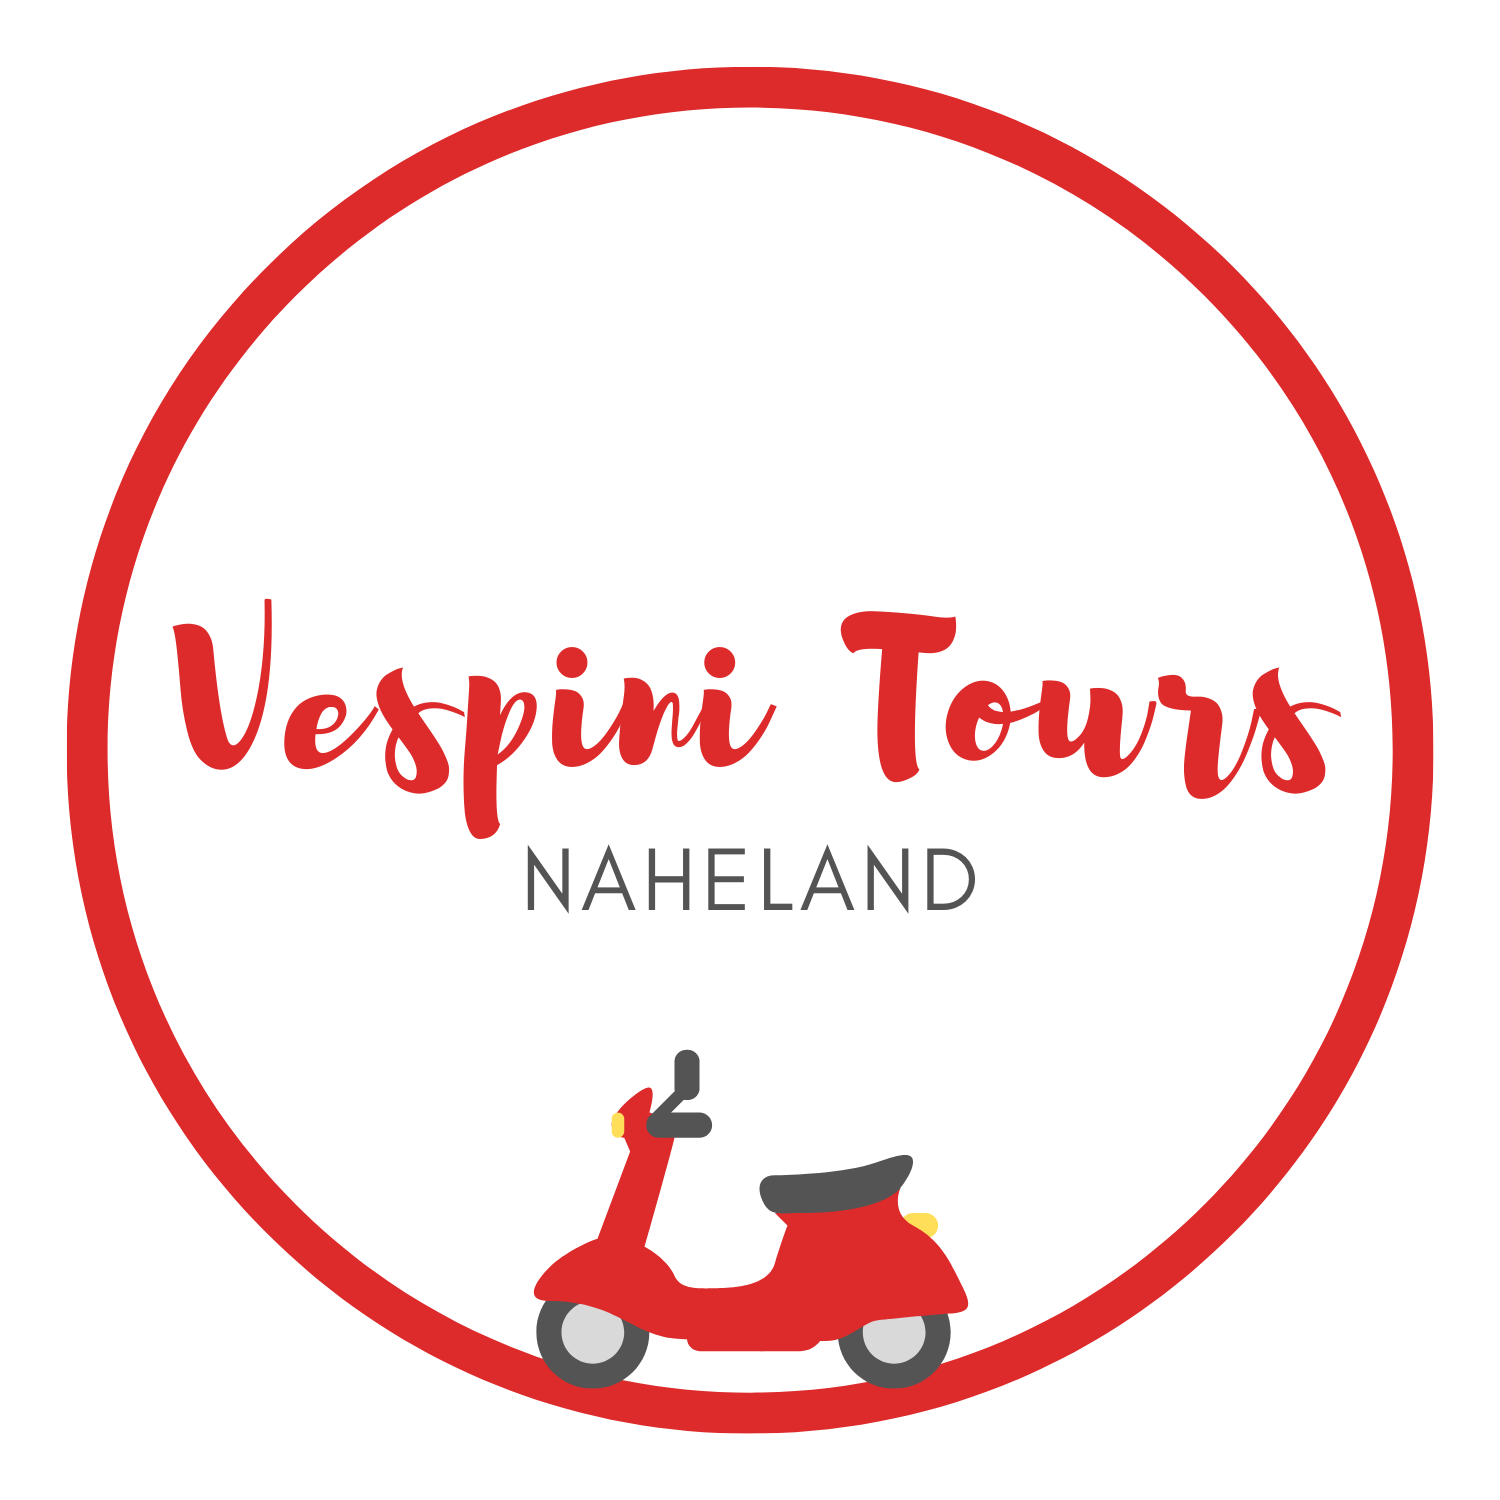 Vespini Tours Naheland